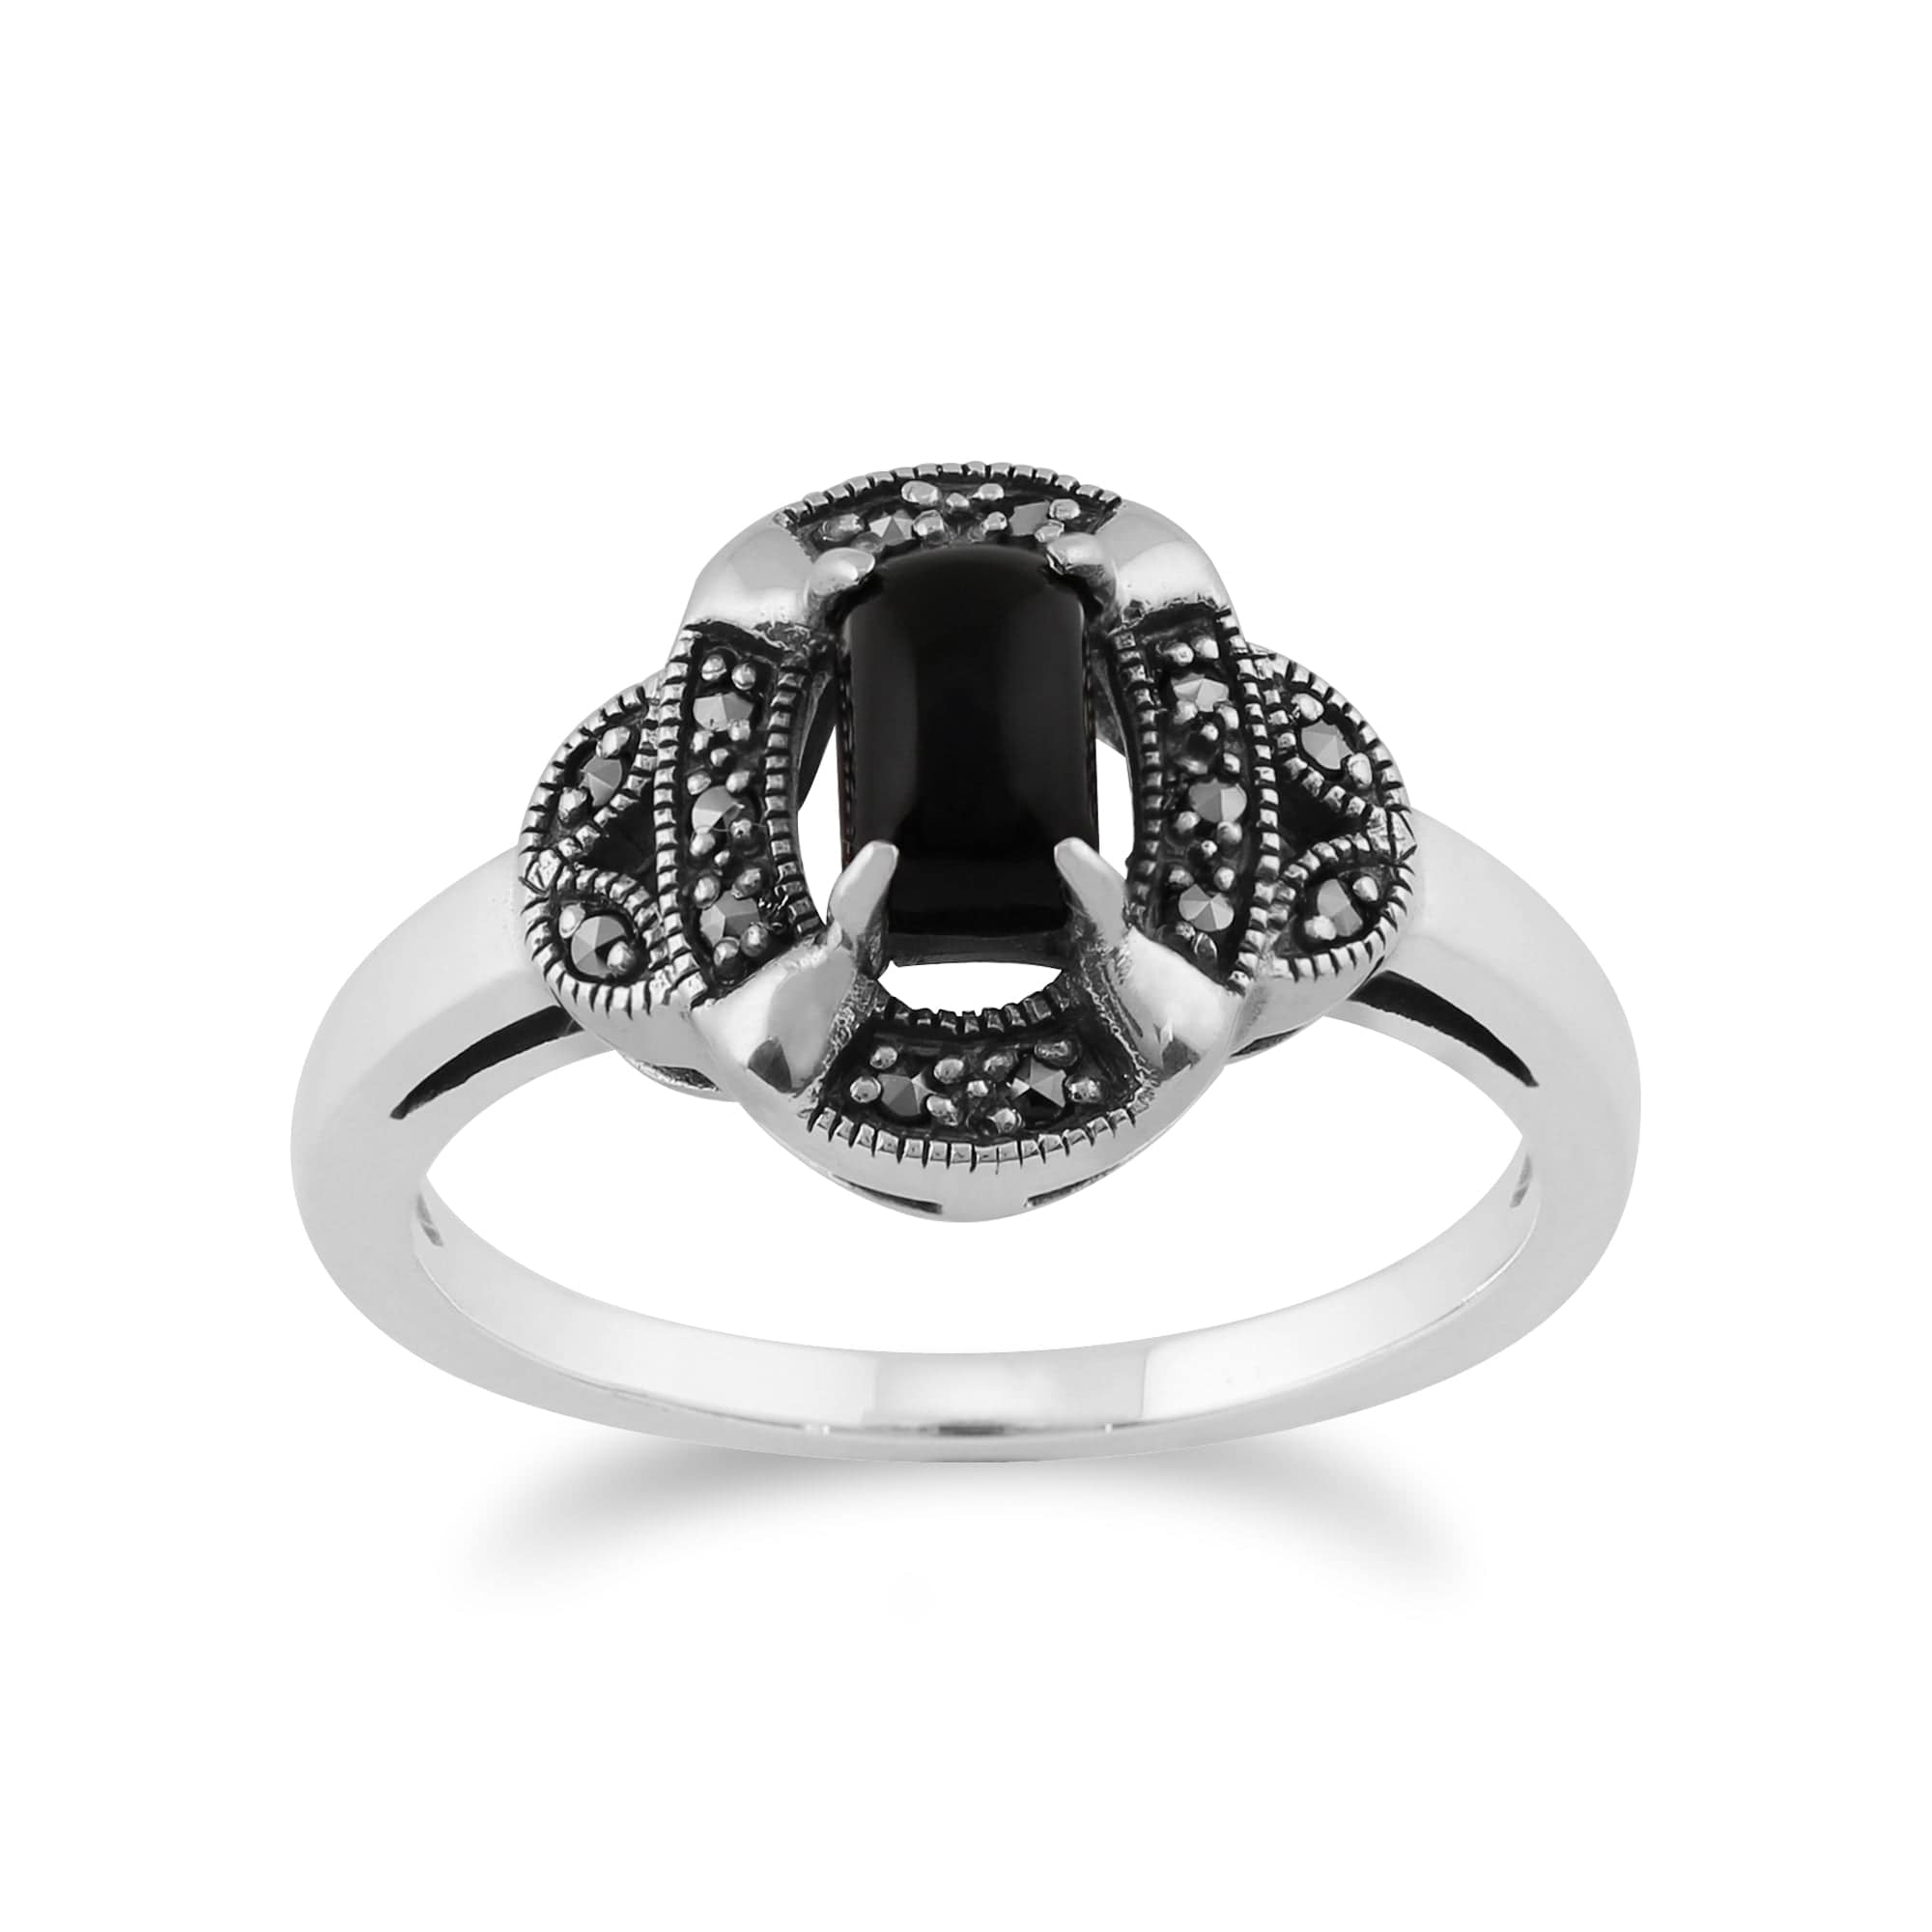 Gemondo 925 Sterling Silver 0.50ct Black Onyx & Marcasite Art Deco Ring Image 1